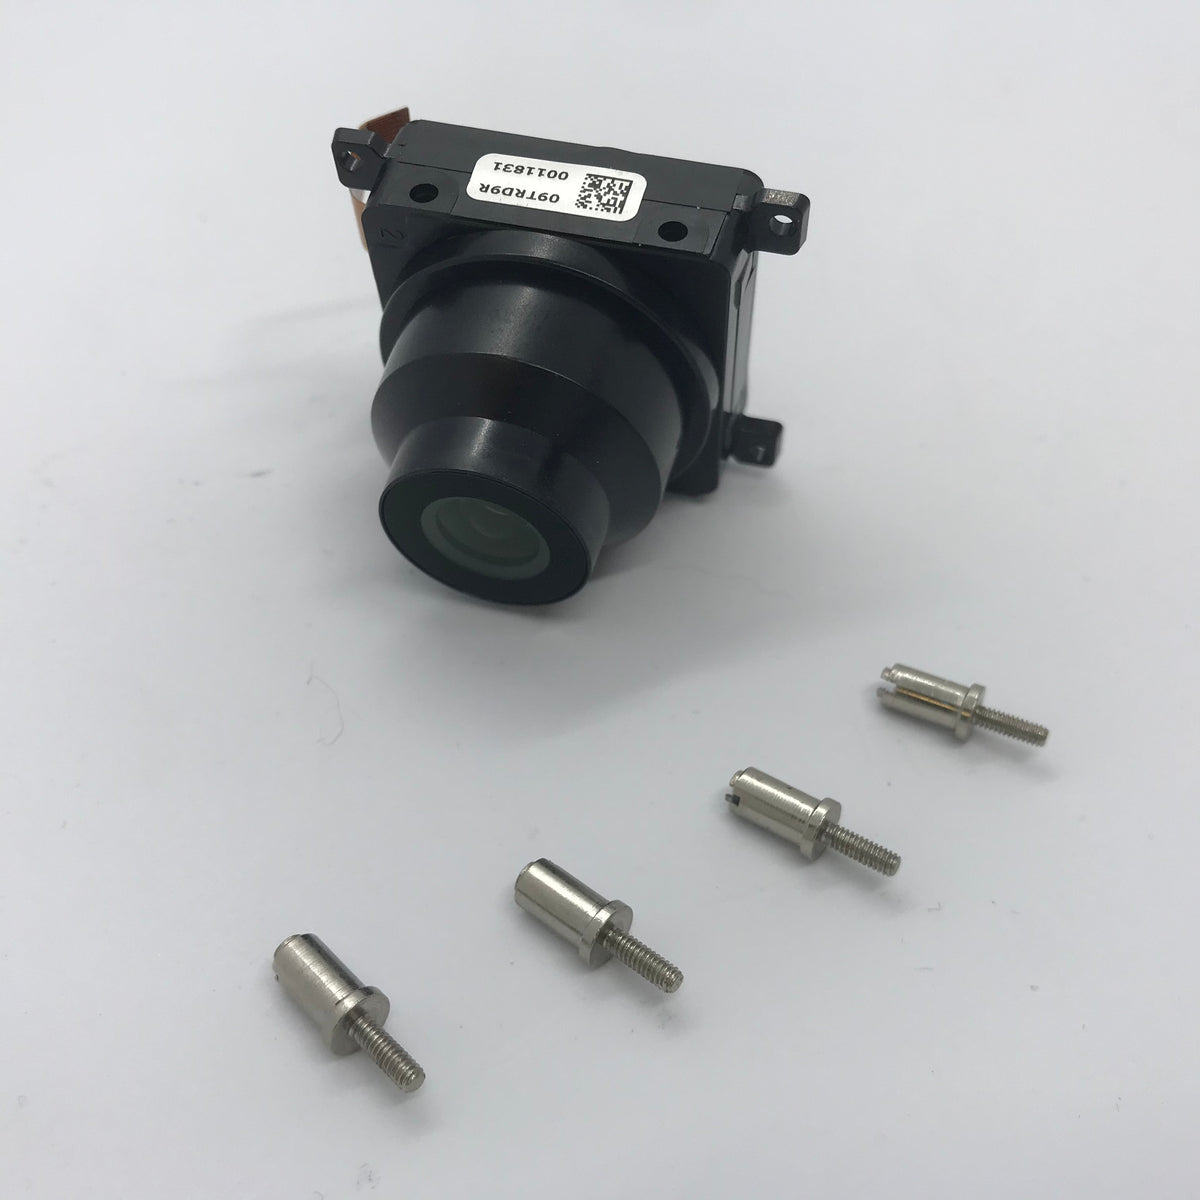 DJI Phantom 4 Pro Advanced V2.0 Gimbal Camera Lens Replacement Repair Part